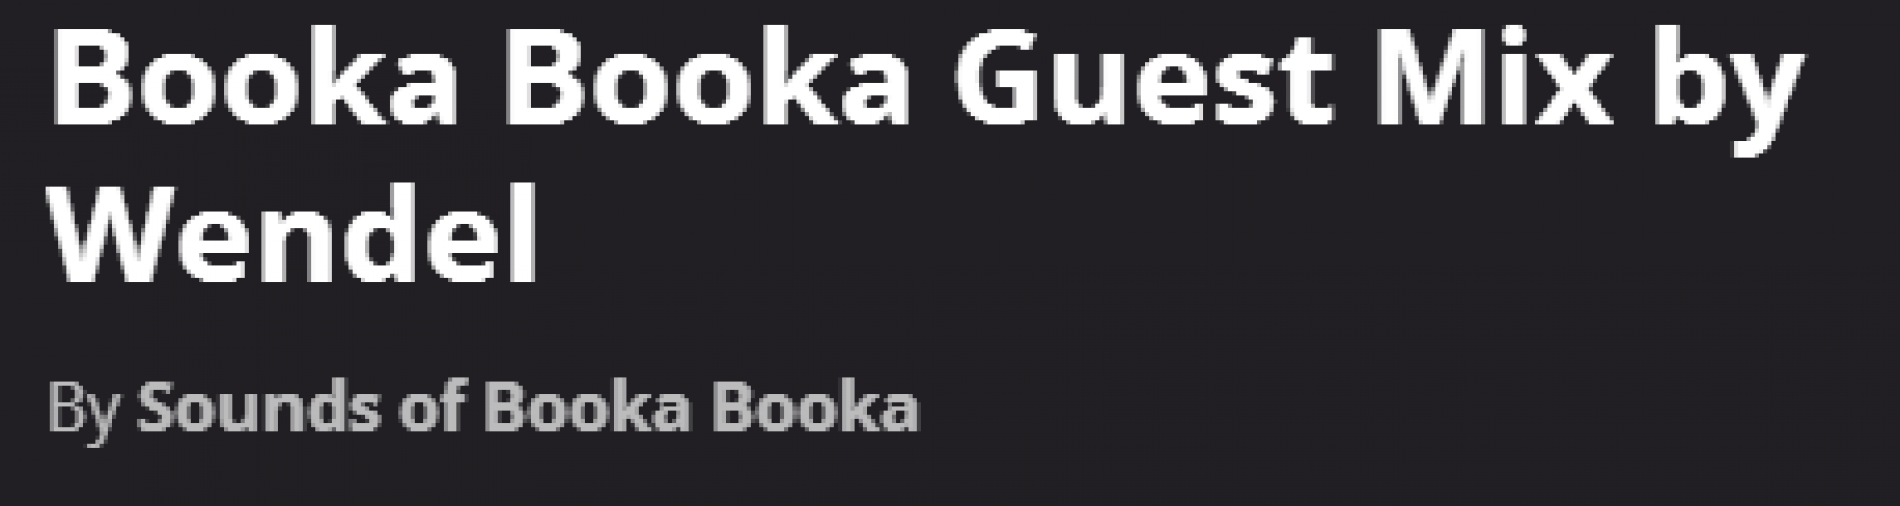 Booka Booka Guest Mix by Dj Wendel